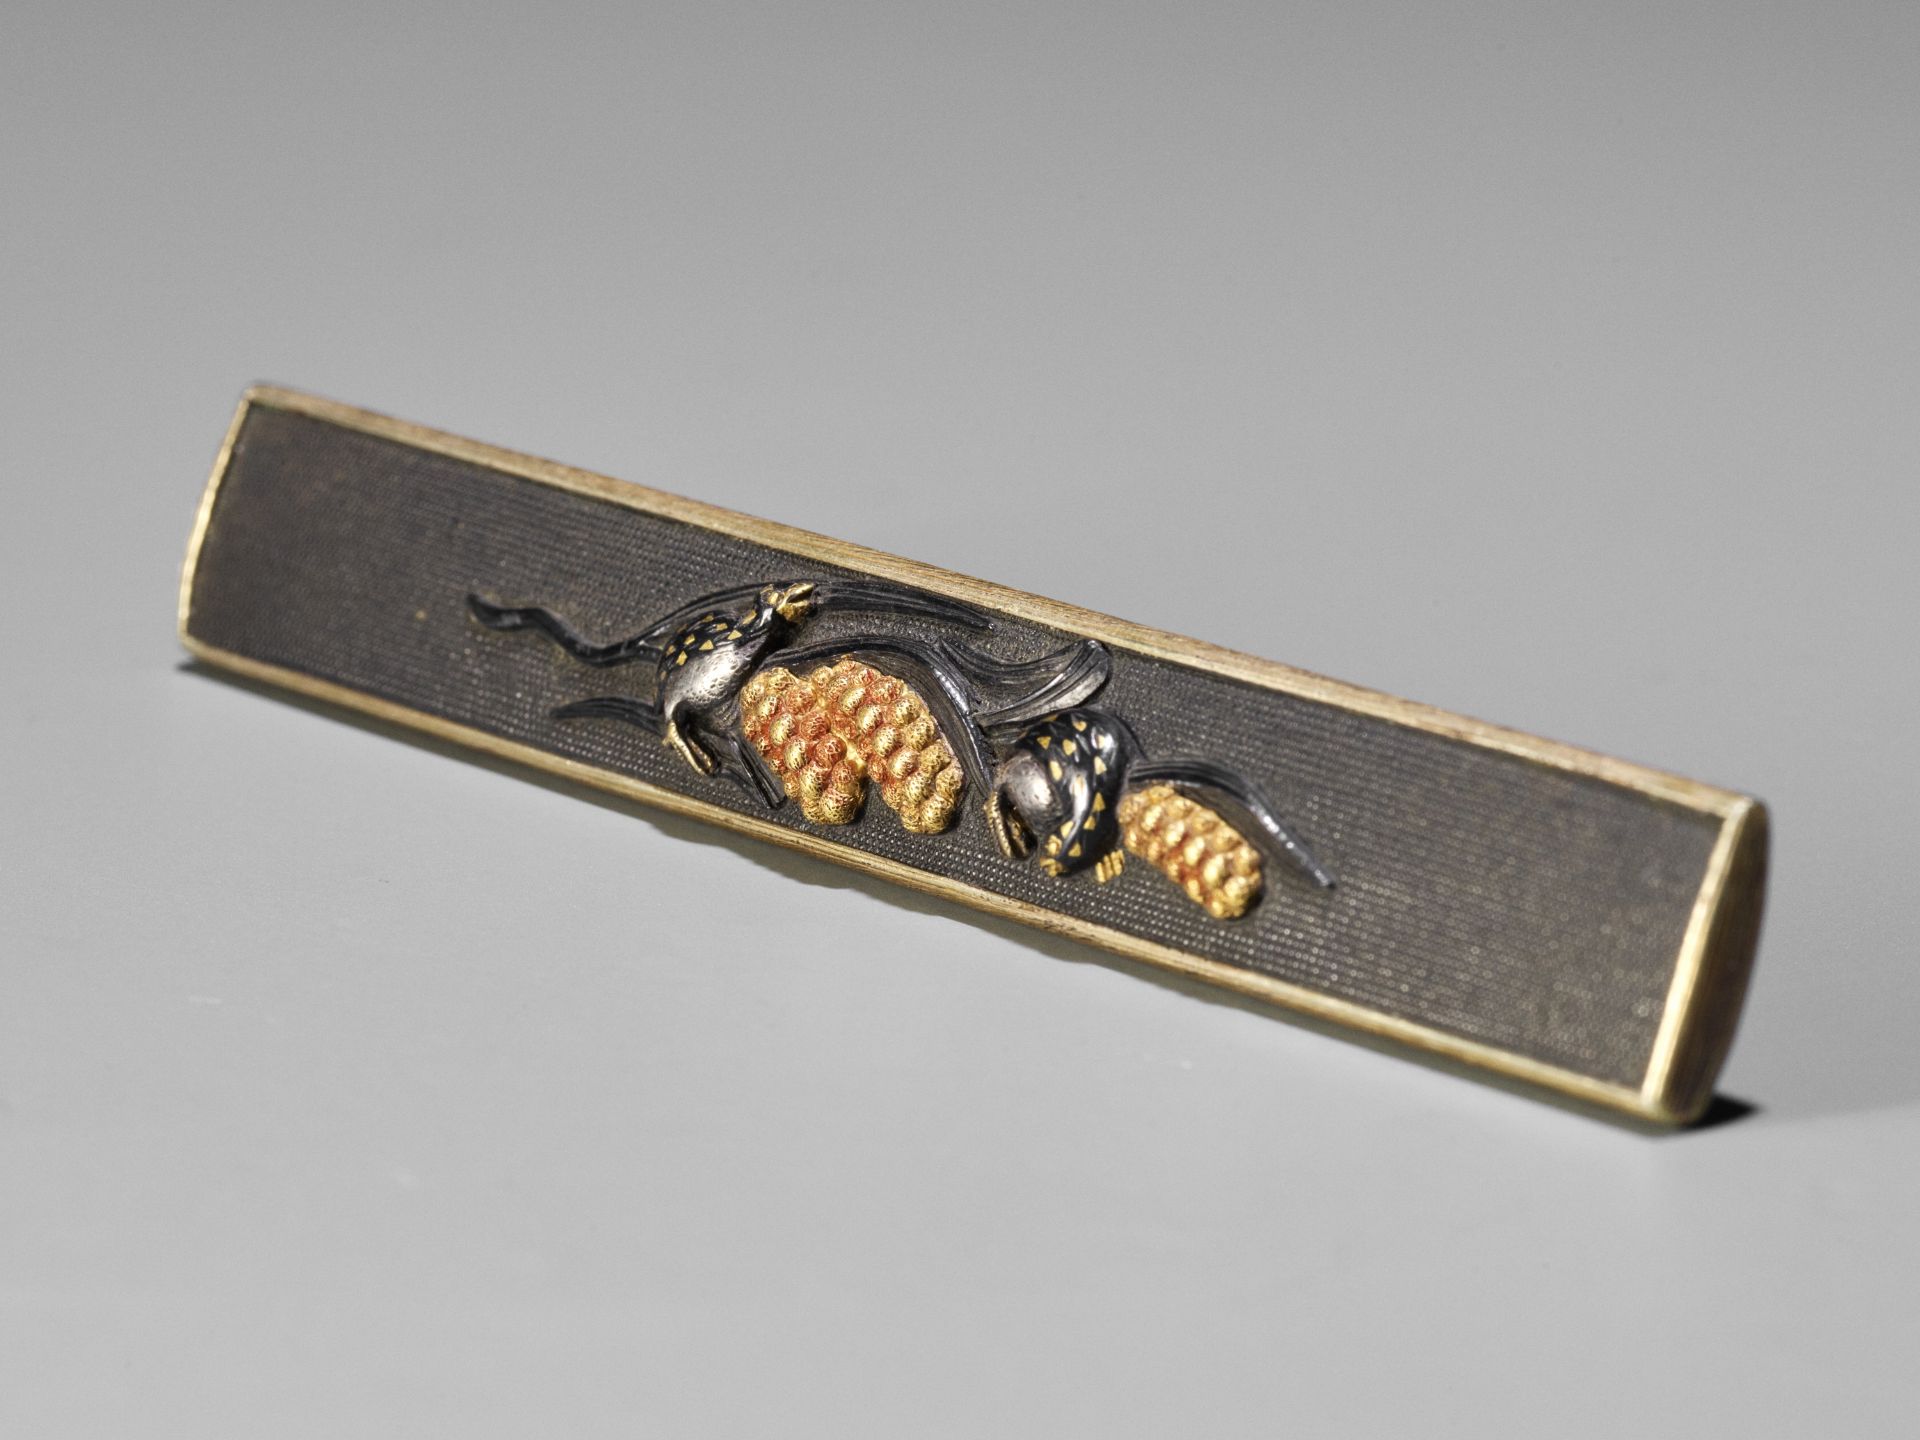 A RARE SET OF A KOZUKA AND MATCHING GOLD MENUKI PAIR DEPICTING QUAILS AND MILLET - Image 3 of 8